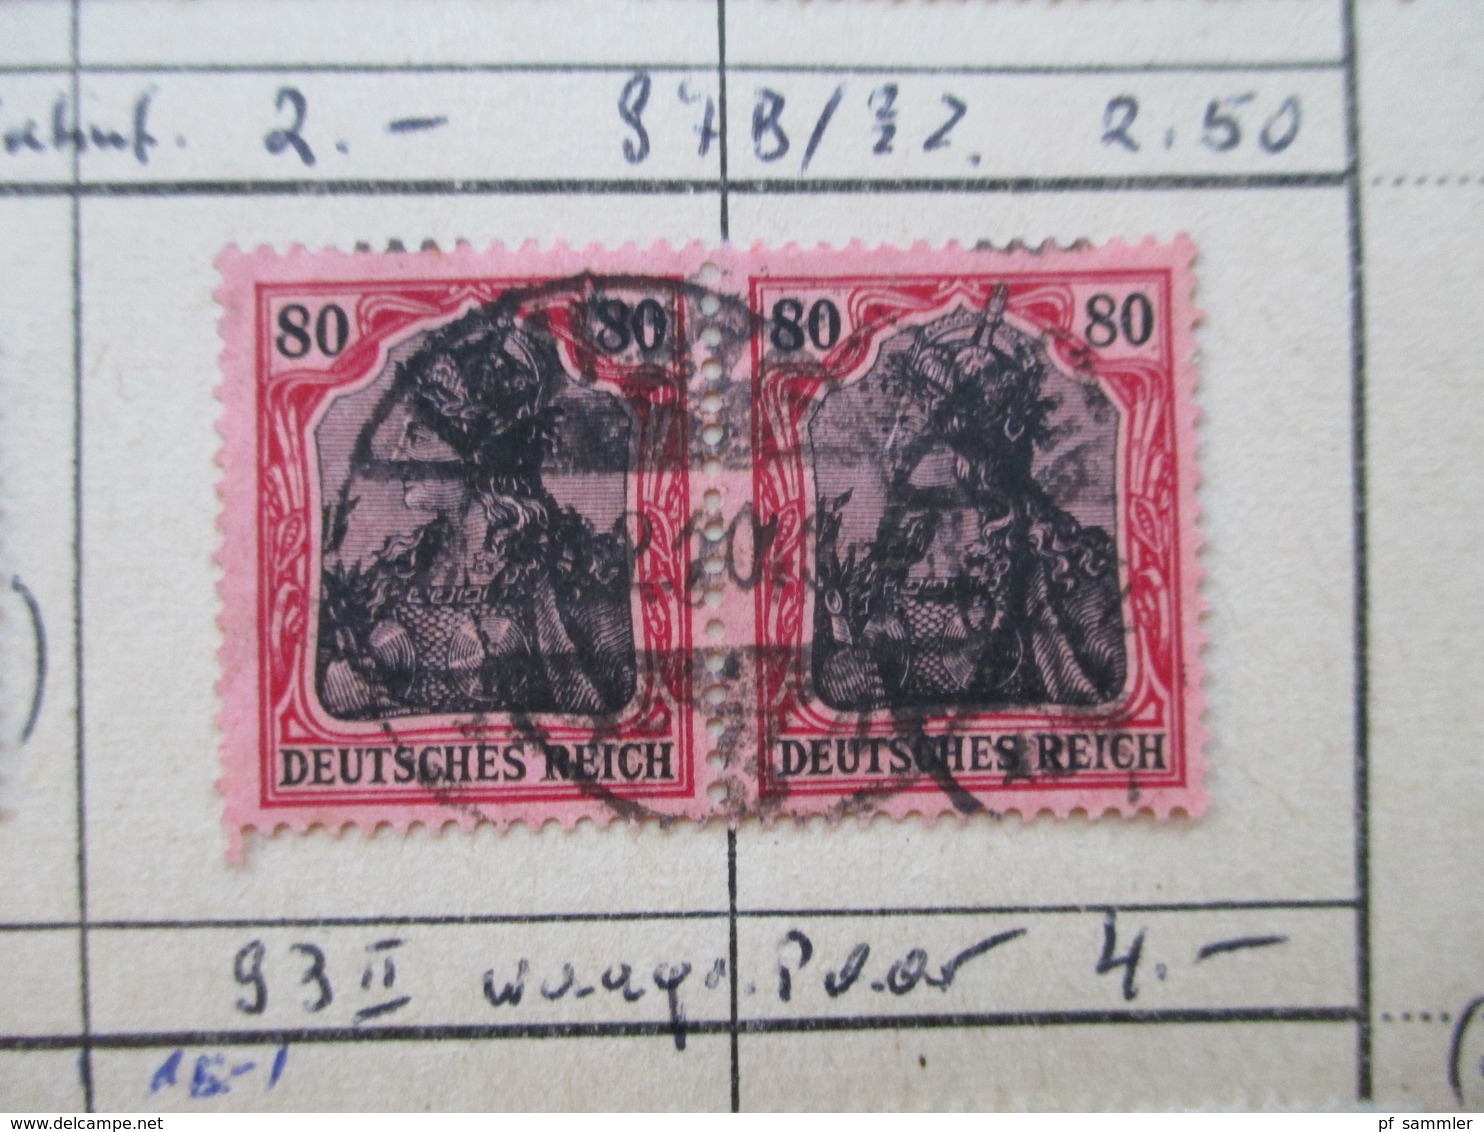 DR altes Auswahlheft ab Krone / Adler - 1915 gestempelt. Farben / saubere Stempel / senkr. Paare / 89 / 91 Iy usw...